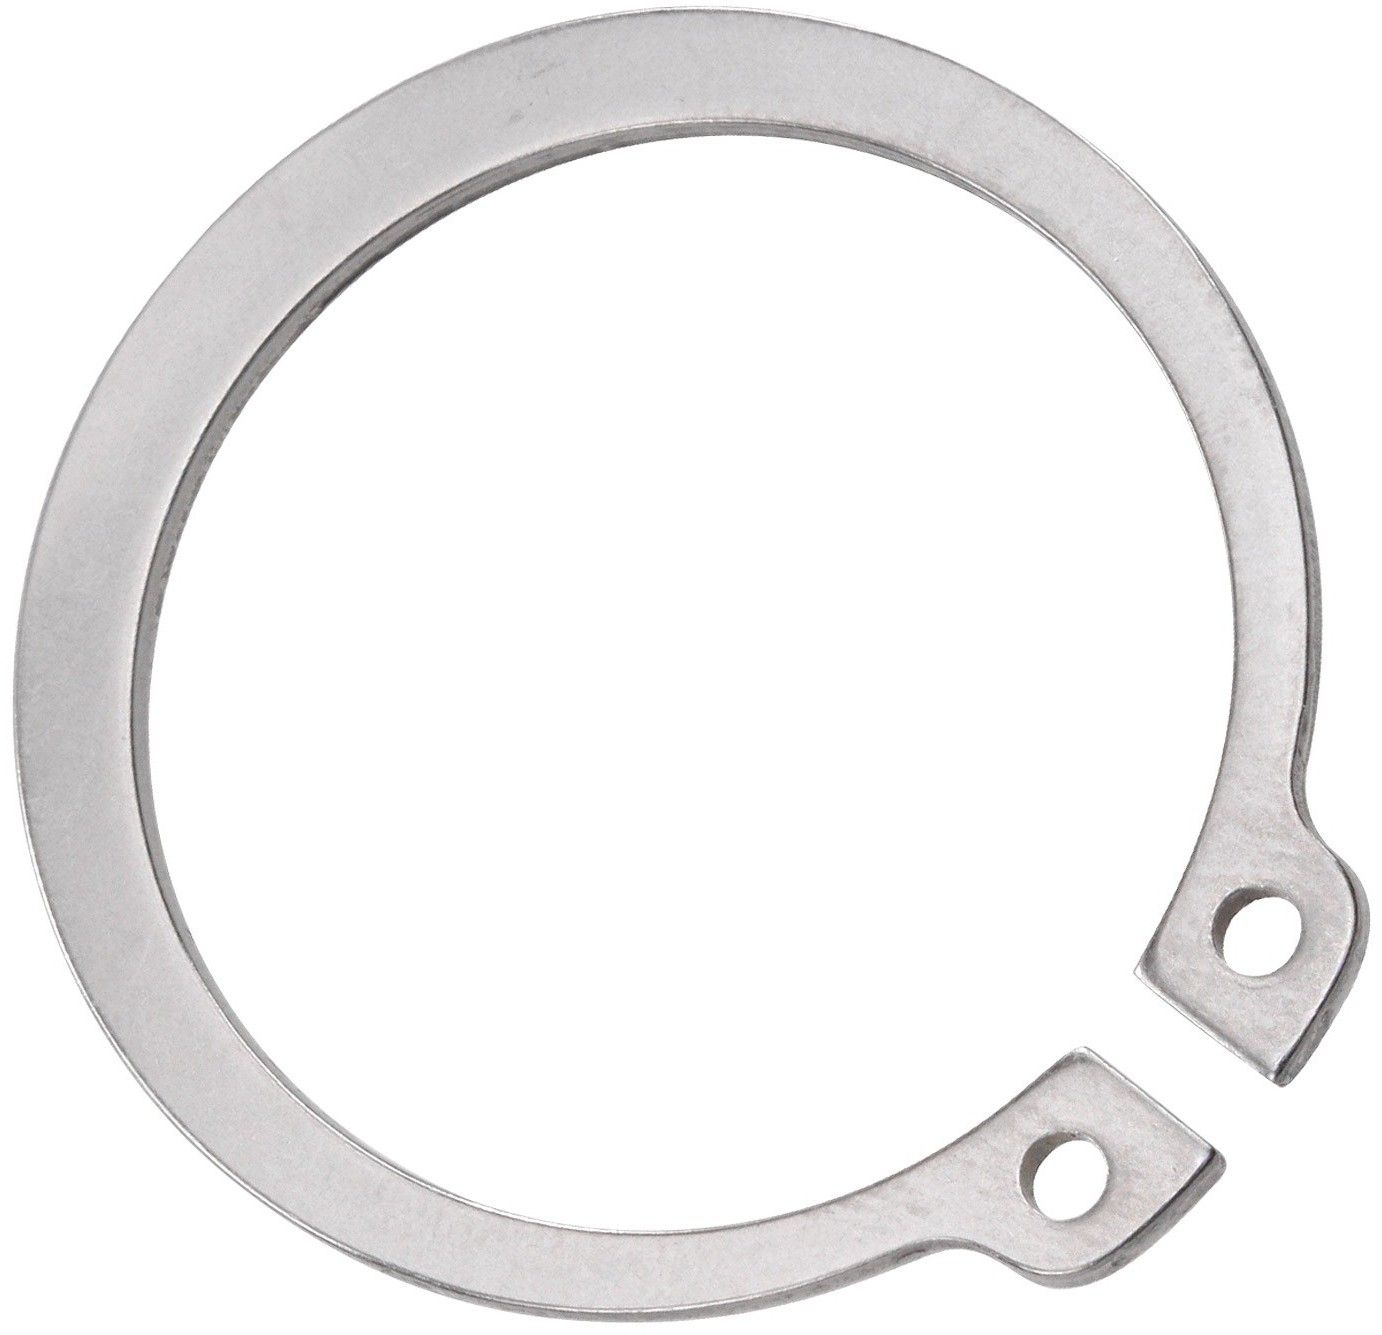 Кольцо стопорное наружное 150х4 DIN 471, нержавеющая сталь 1.4122 (А2) - фото